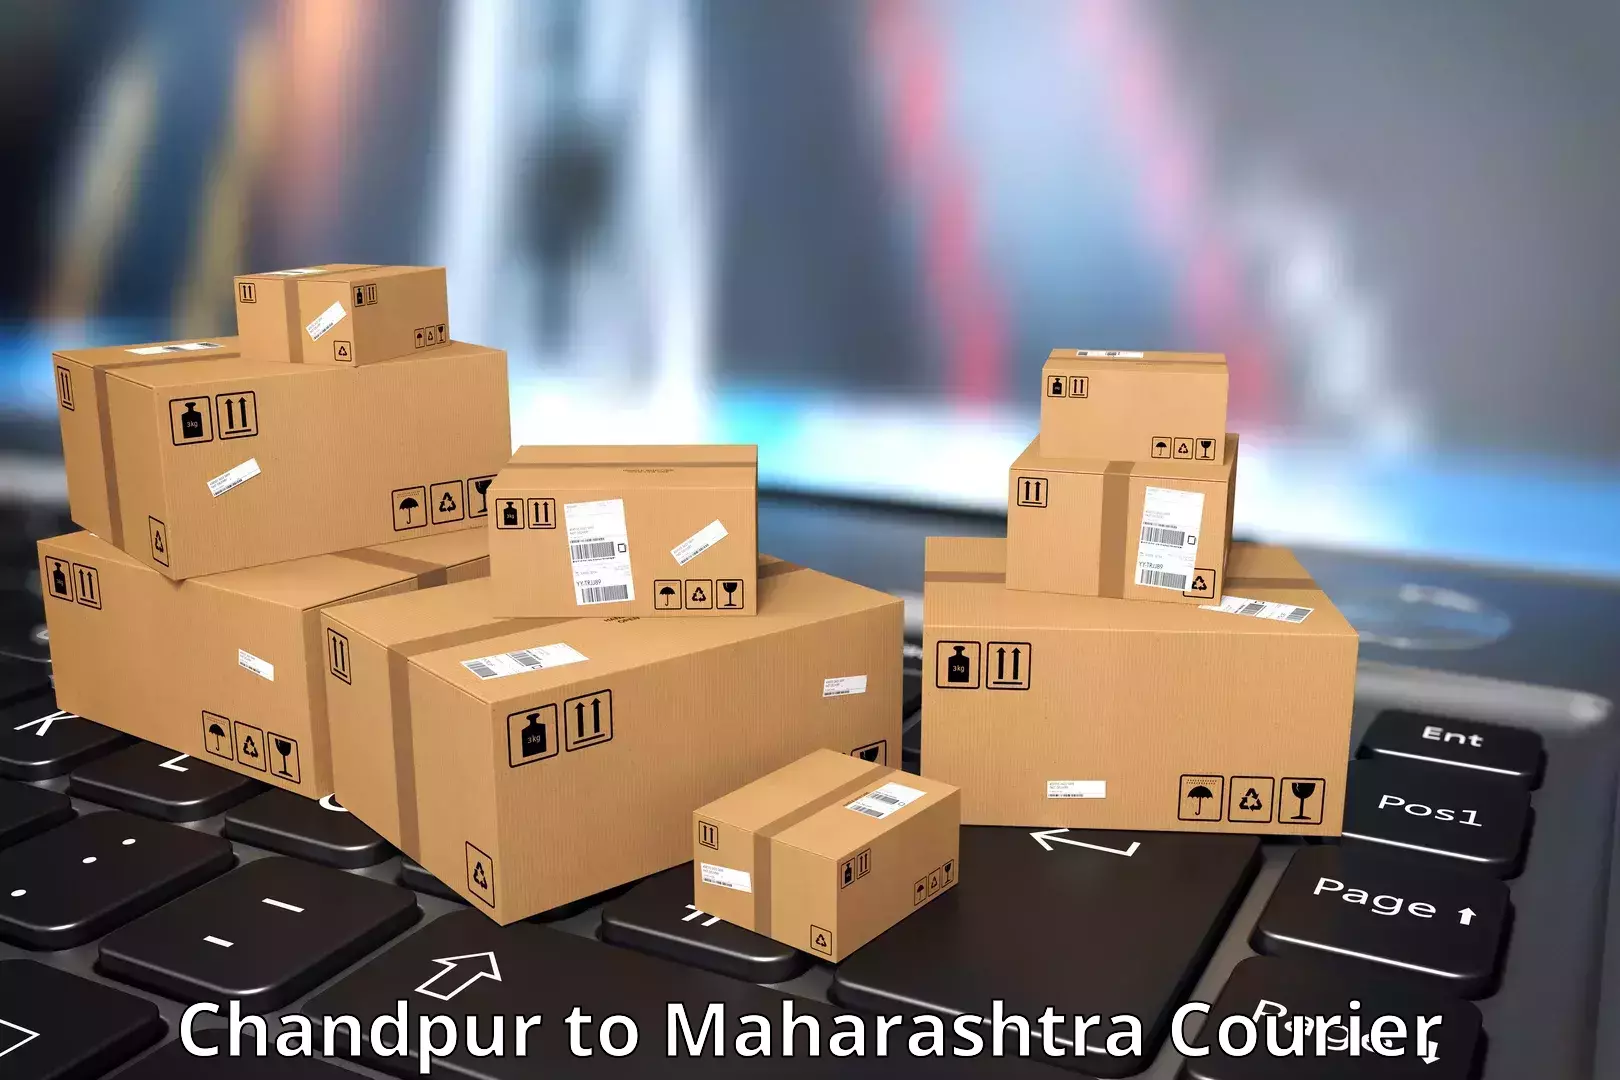 Flexible delivery scheduling Chandpur to Gondpipri